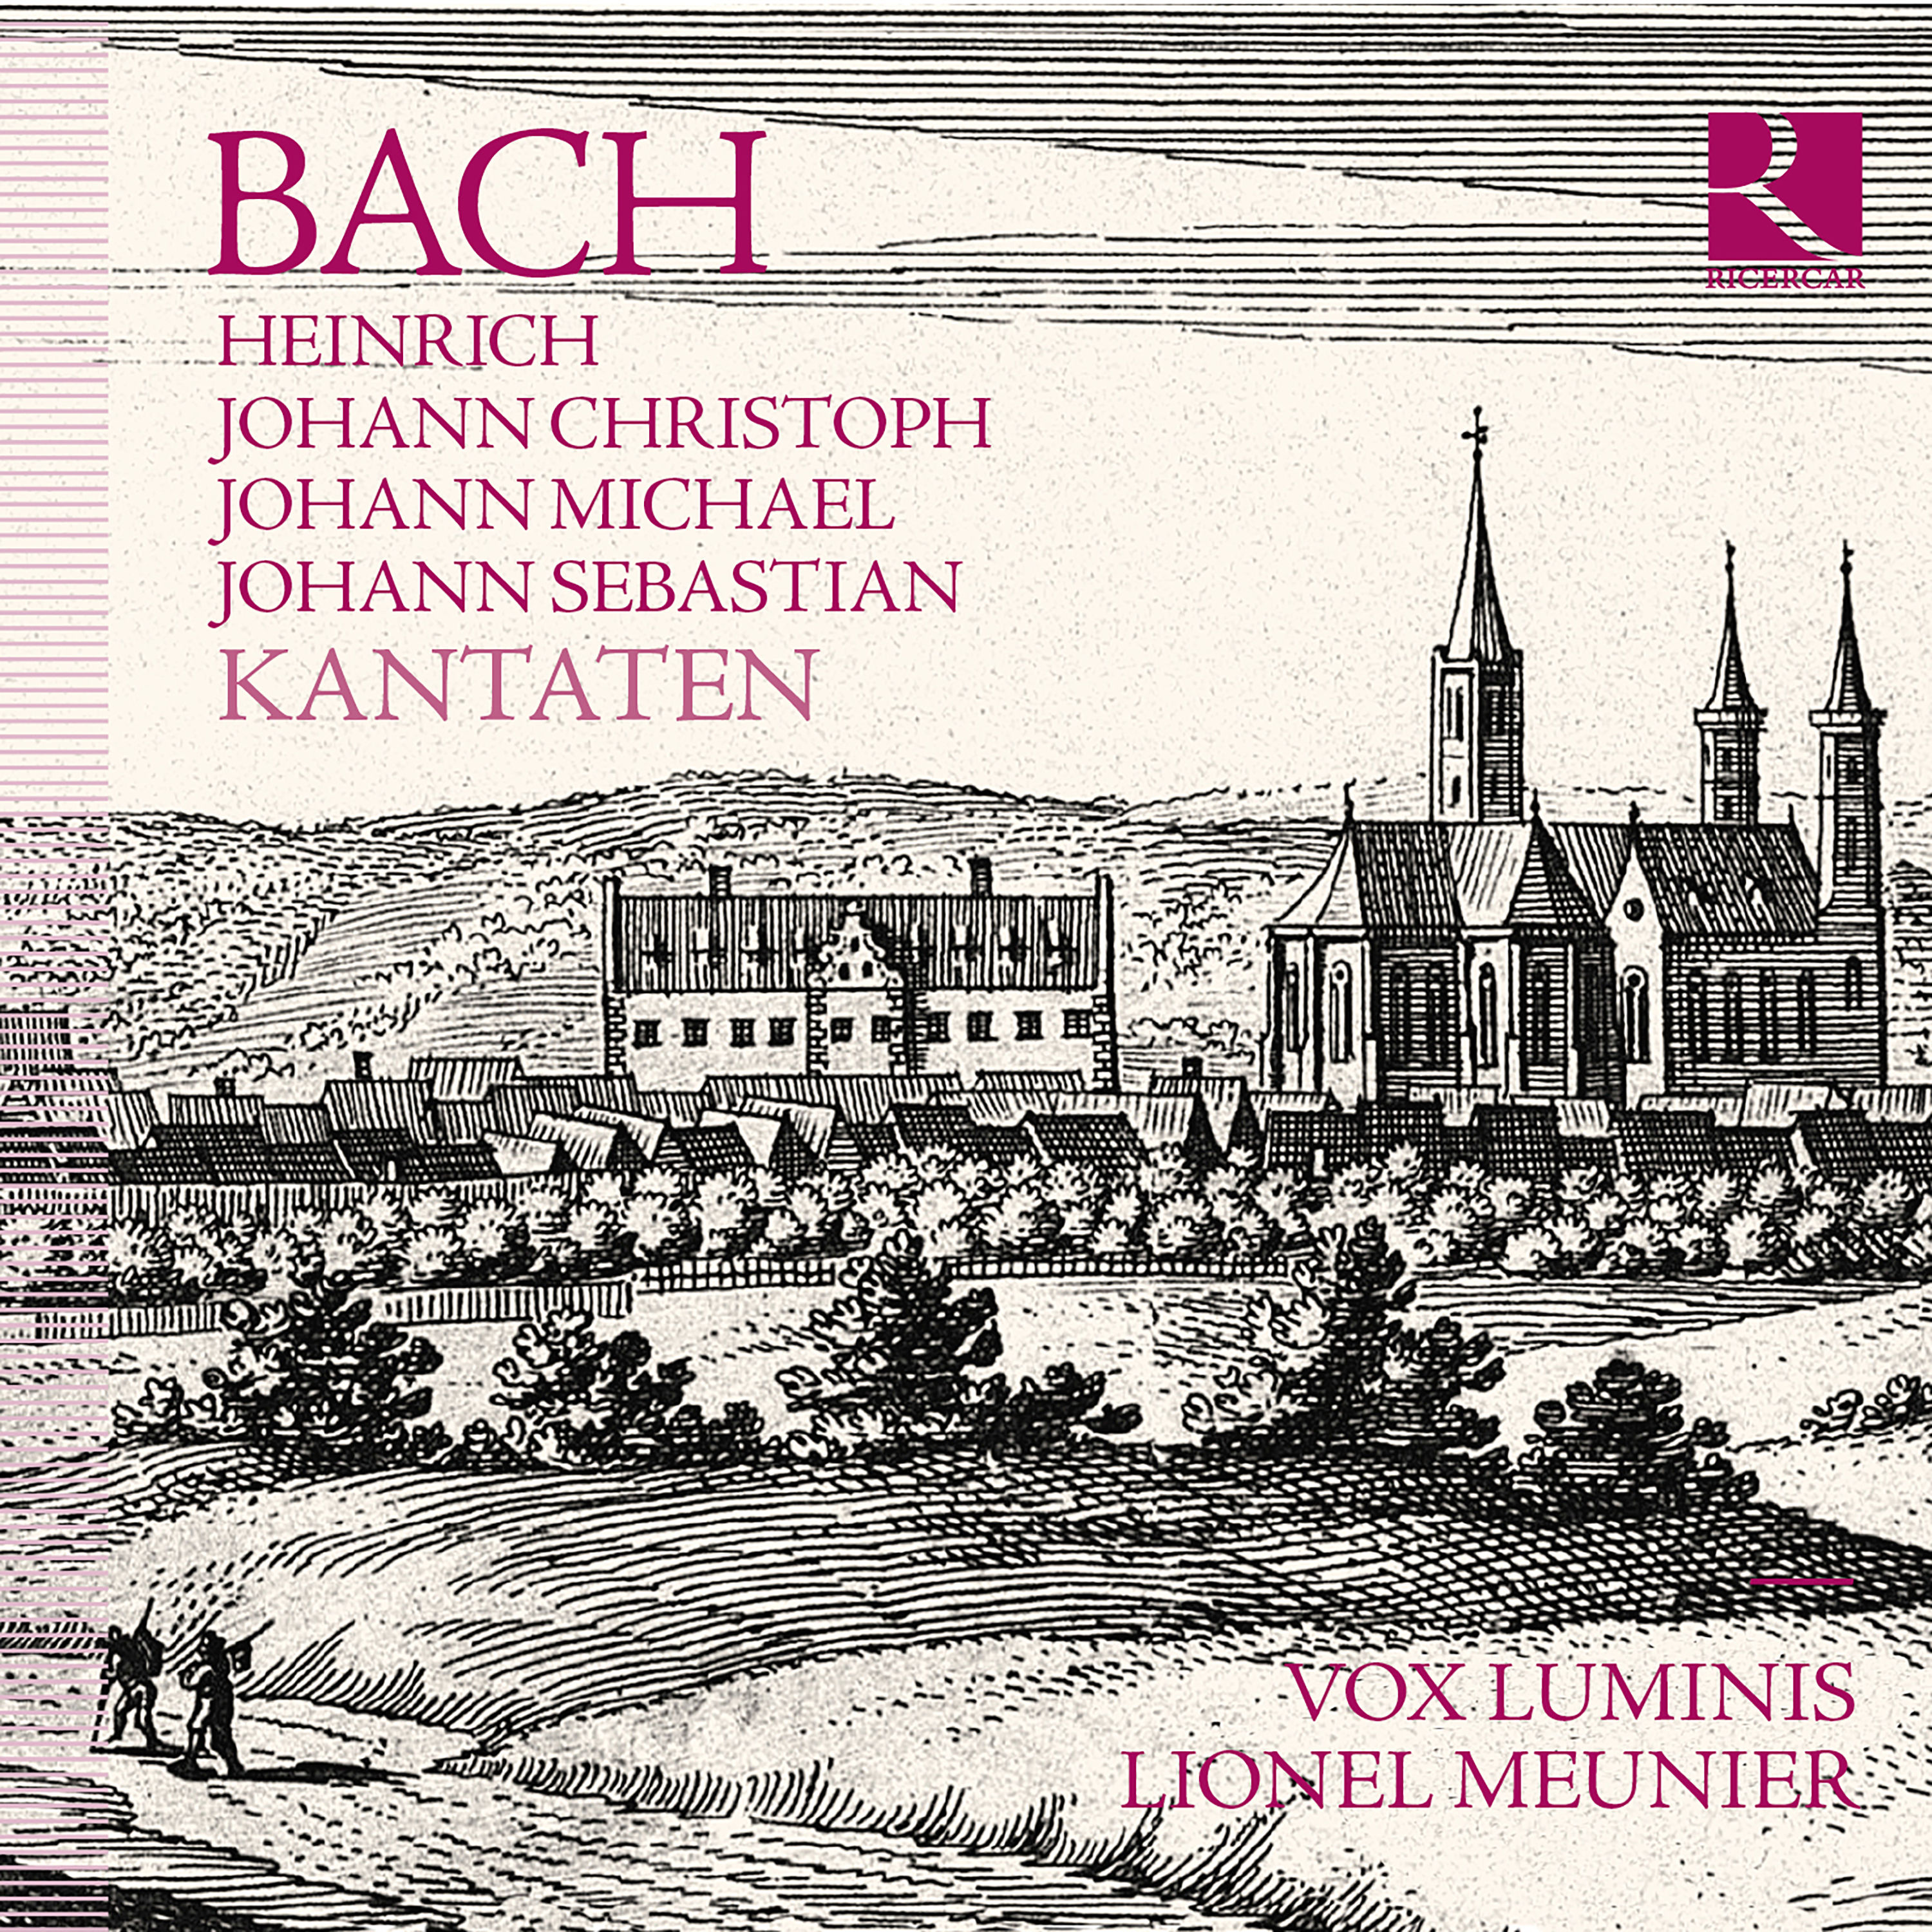 Vox Luminis & Lionel Meunier - Bach (Heinrich, J. Christoph, J. Michael, J. Sebastian): Kantaten (2019) [FLAC 24bit/96kHz]